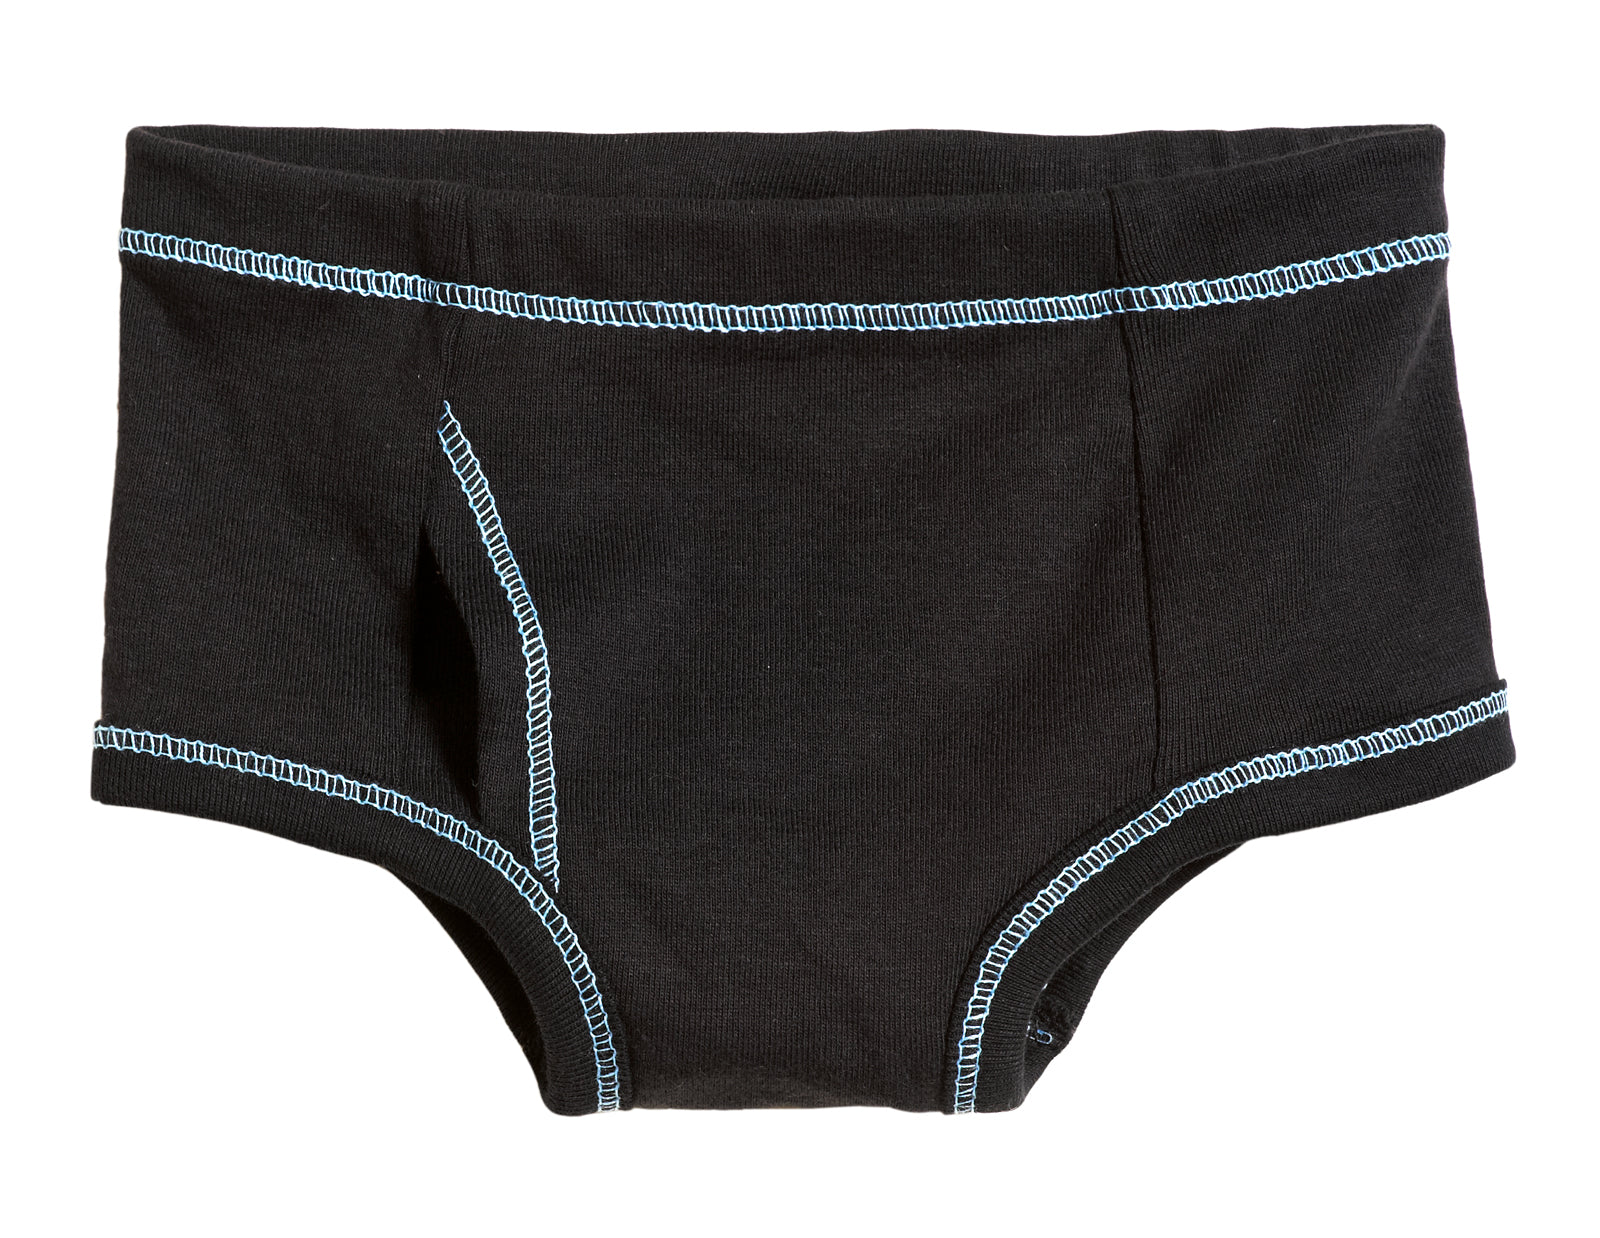 Trimfit Boys Soft Cotton Colorful Briefs Pack of 7 Kids Underwear